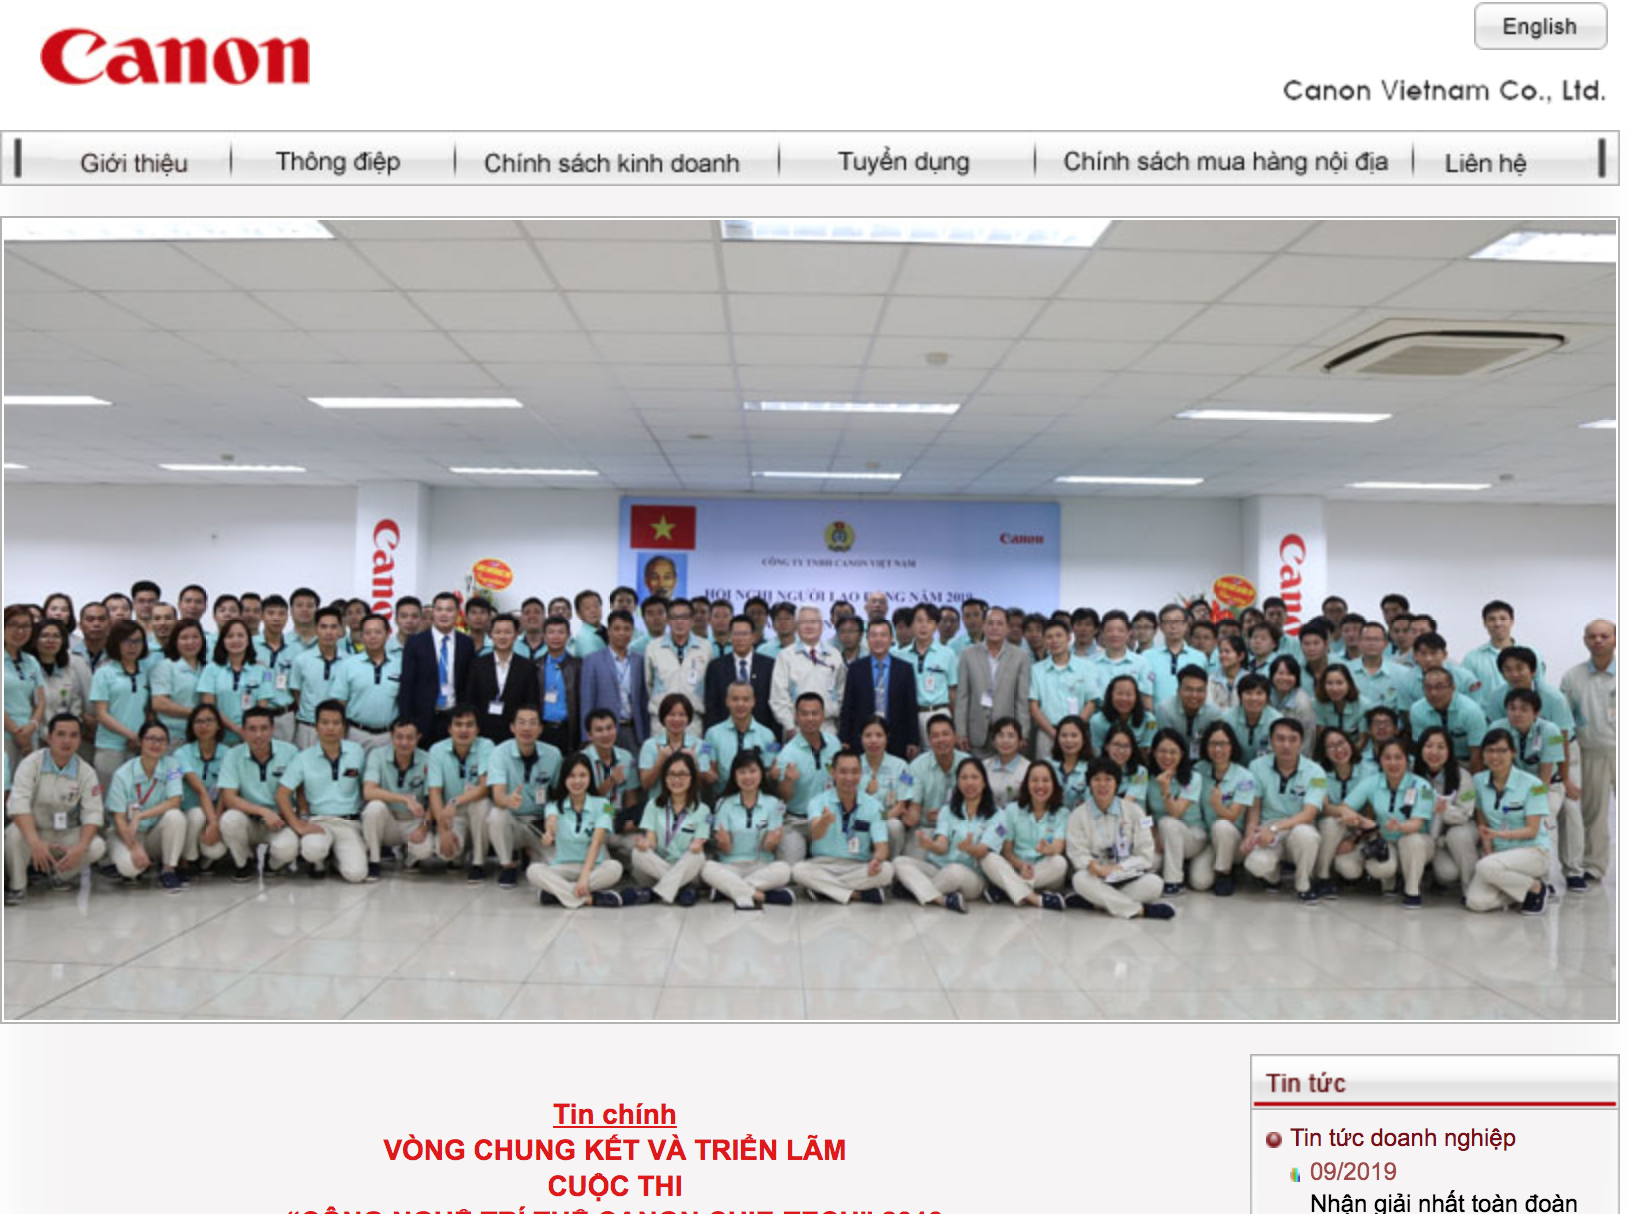 A microsite for Canon’s Vietnamese portal